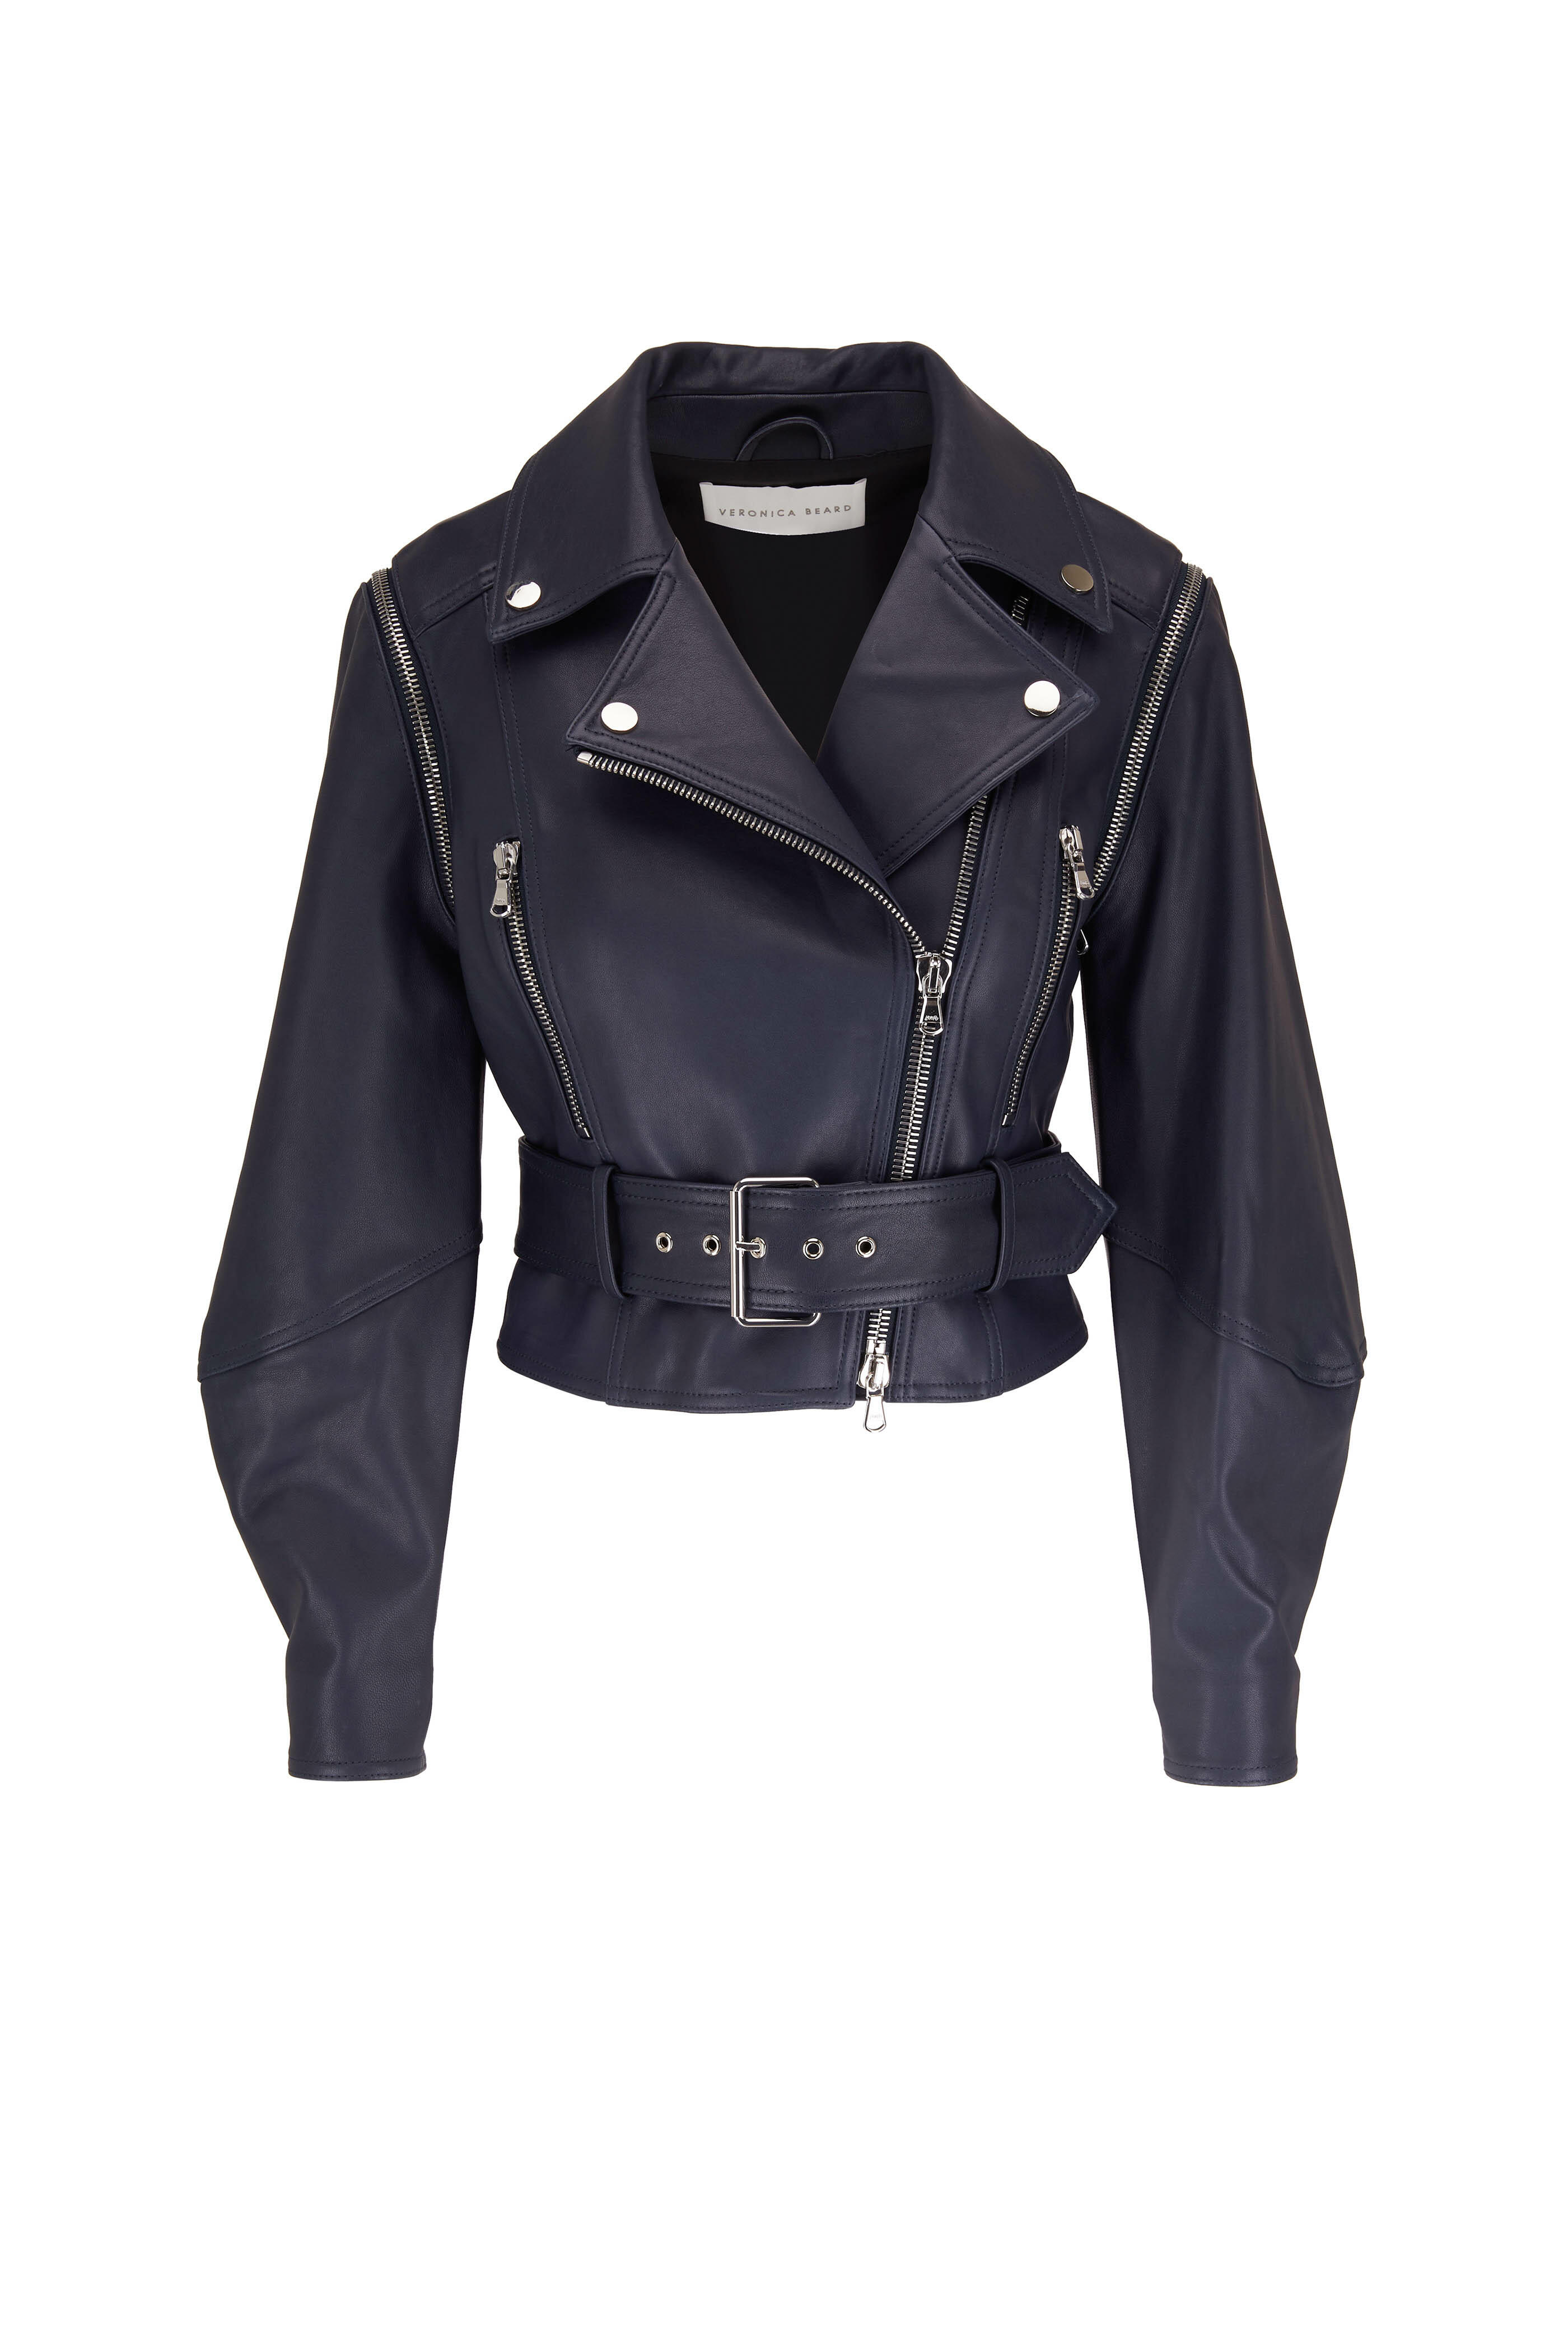 Veronica Beard - Jylan Navy Moto Convertible Jacket Leather